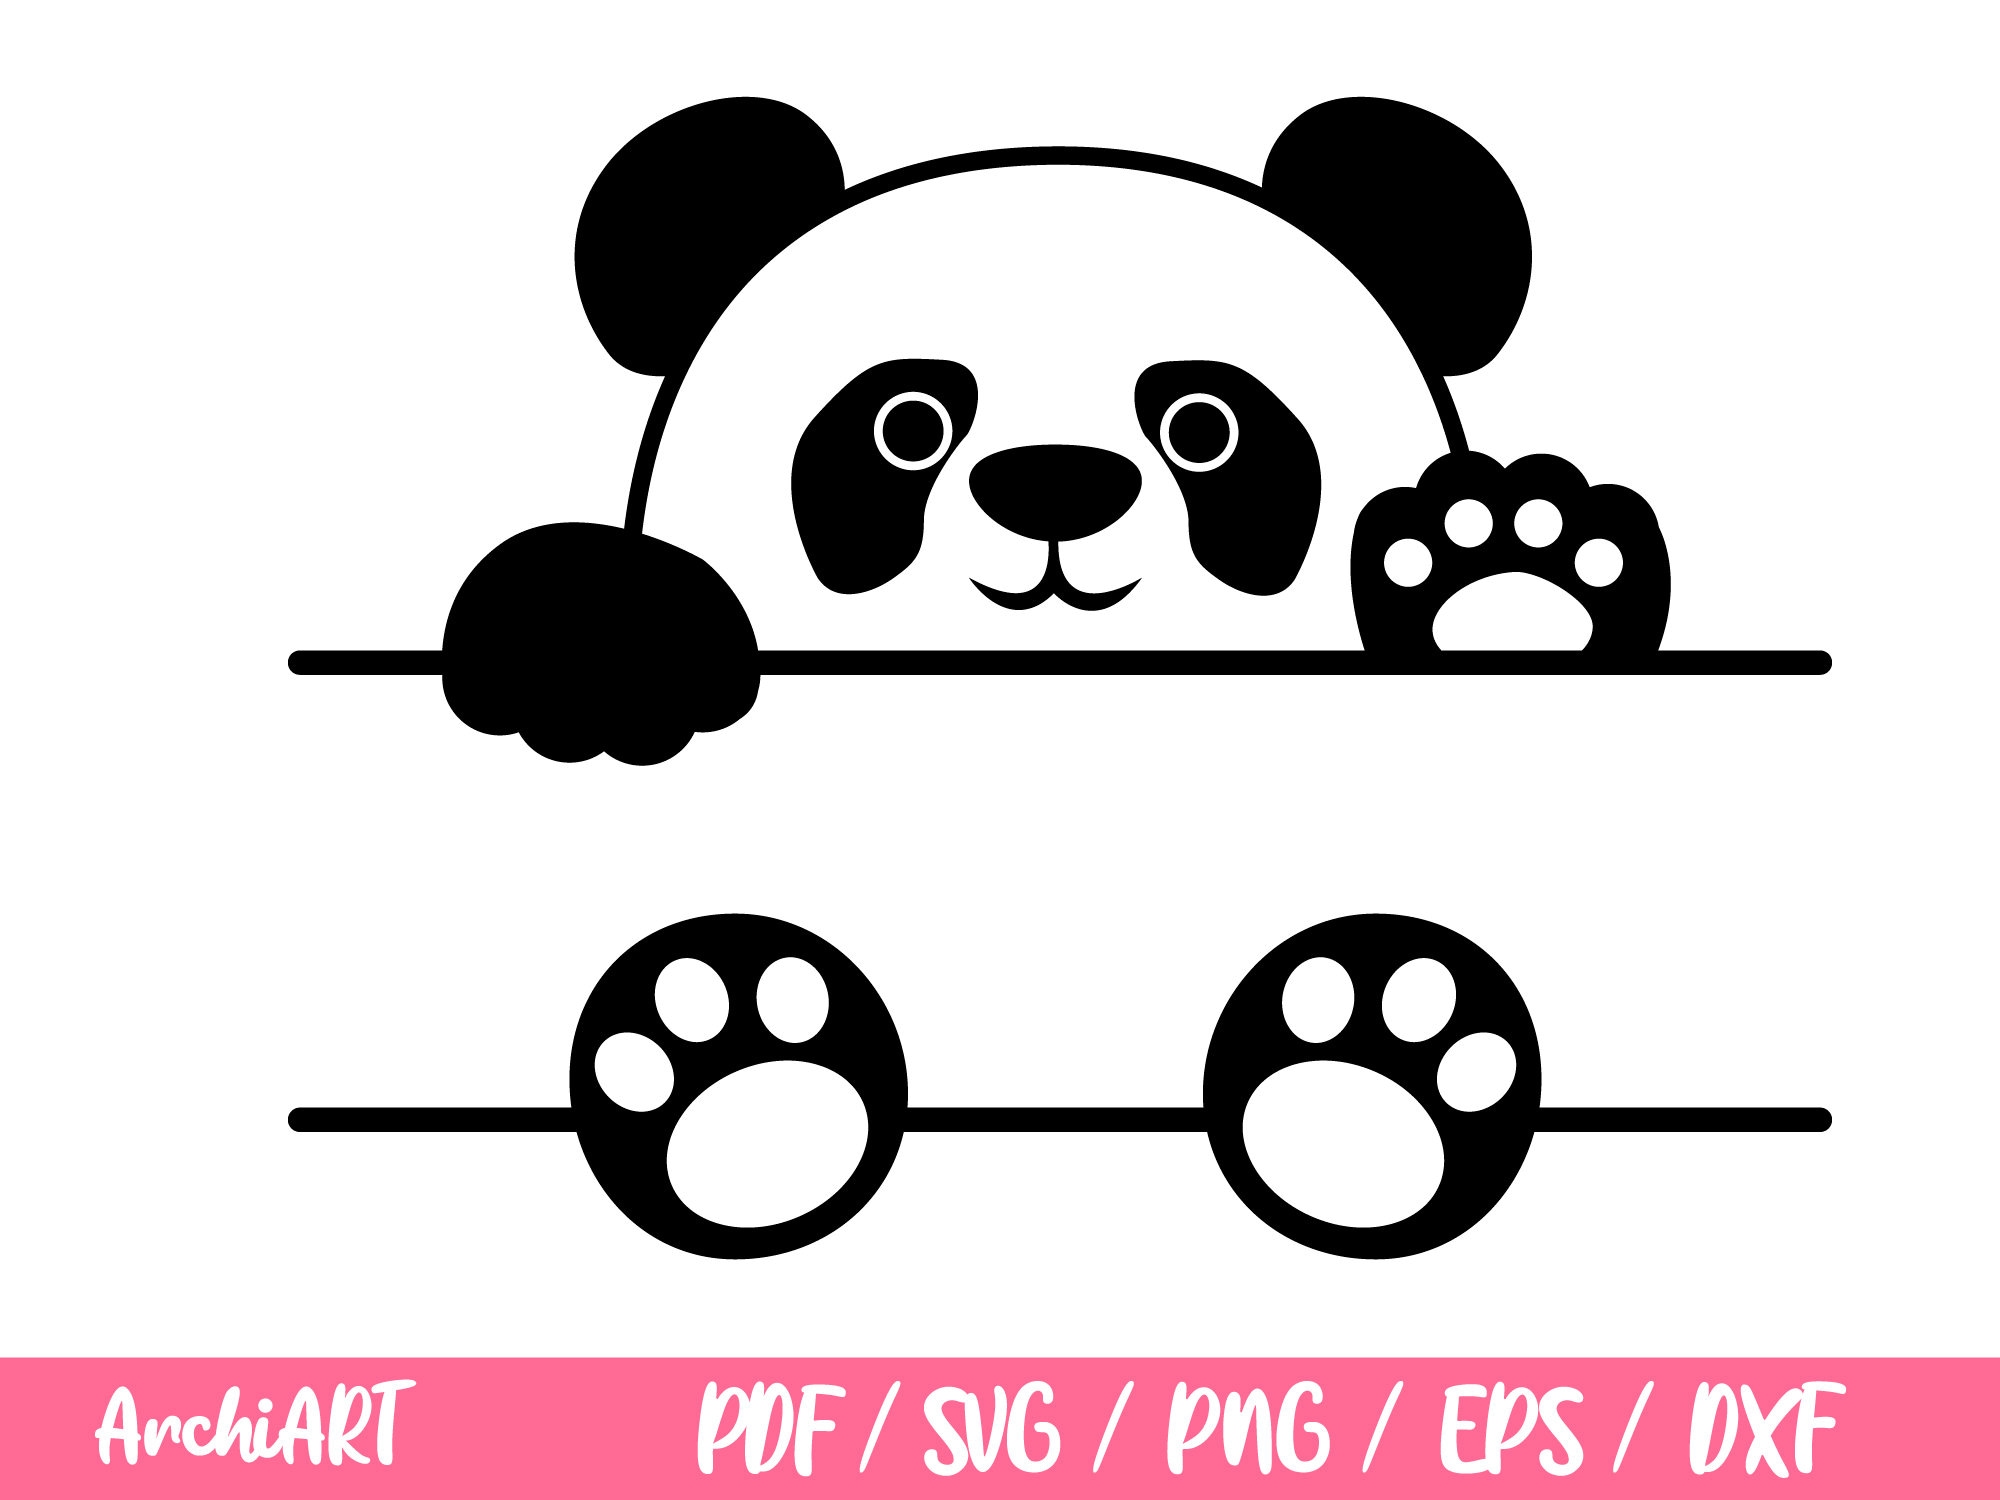 Cute baby panda layered SVG Kawaii panda cut file Cartoon panda cutting  Kids Cuttable Animal vector DXF Silhouette Cameo Cricut Vinyl Shirt